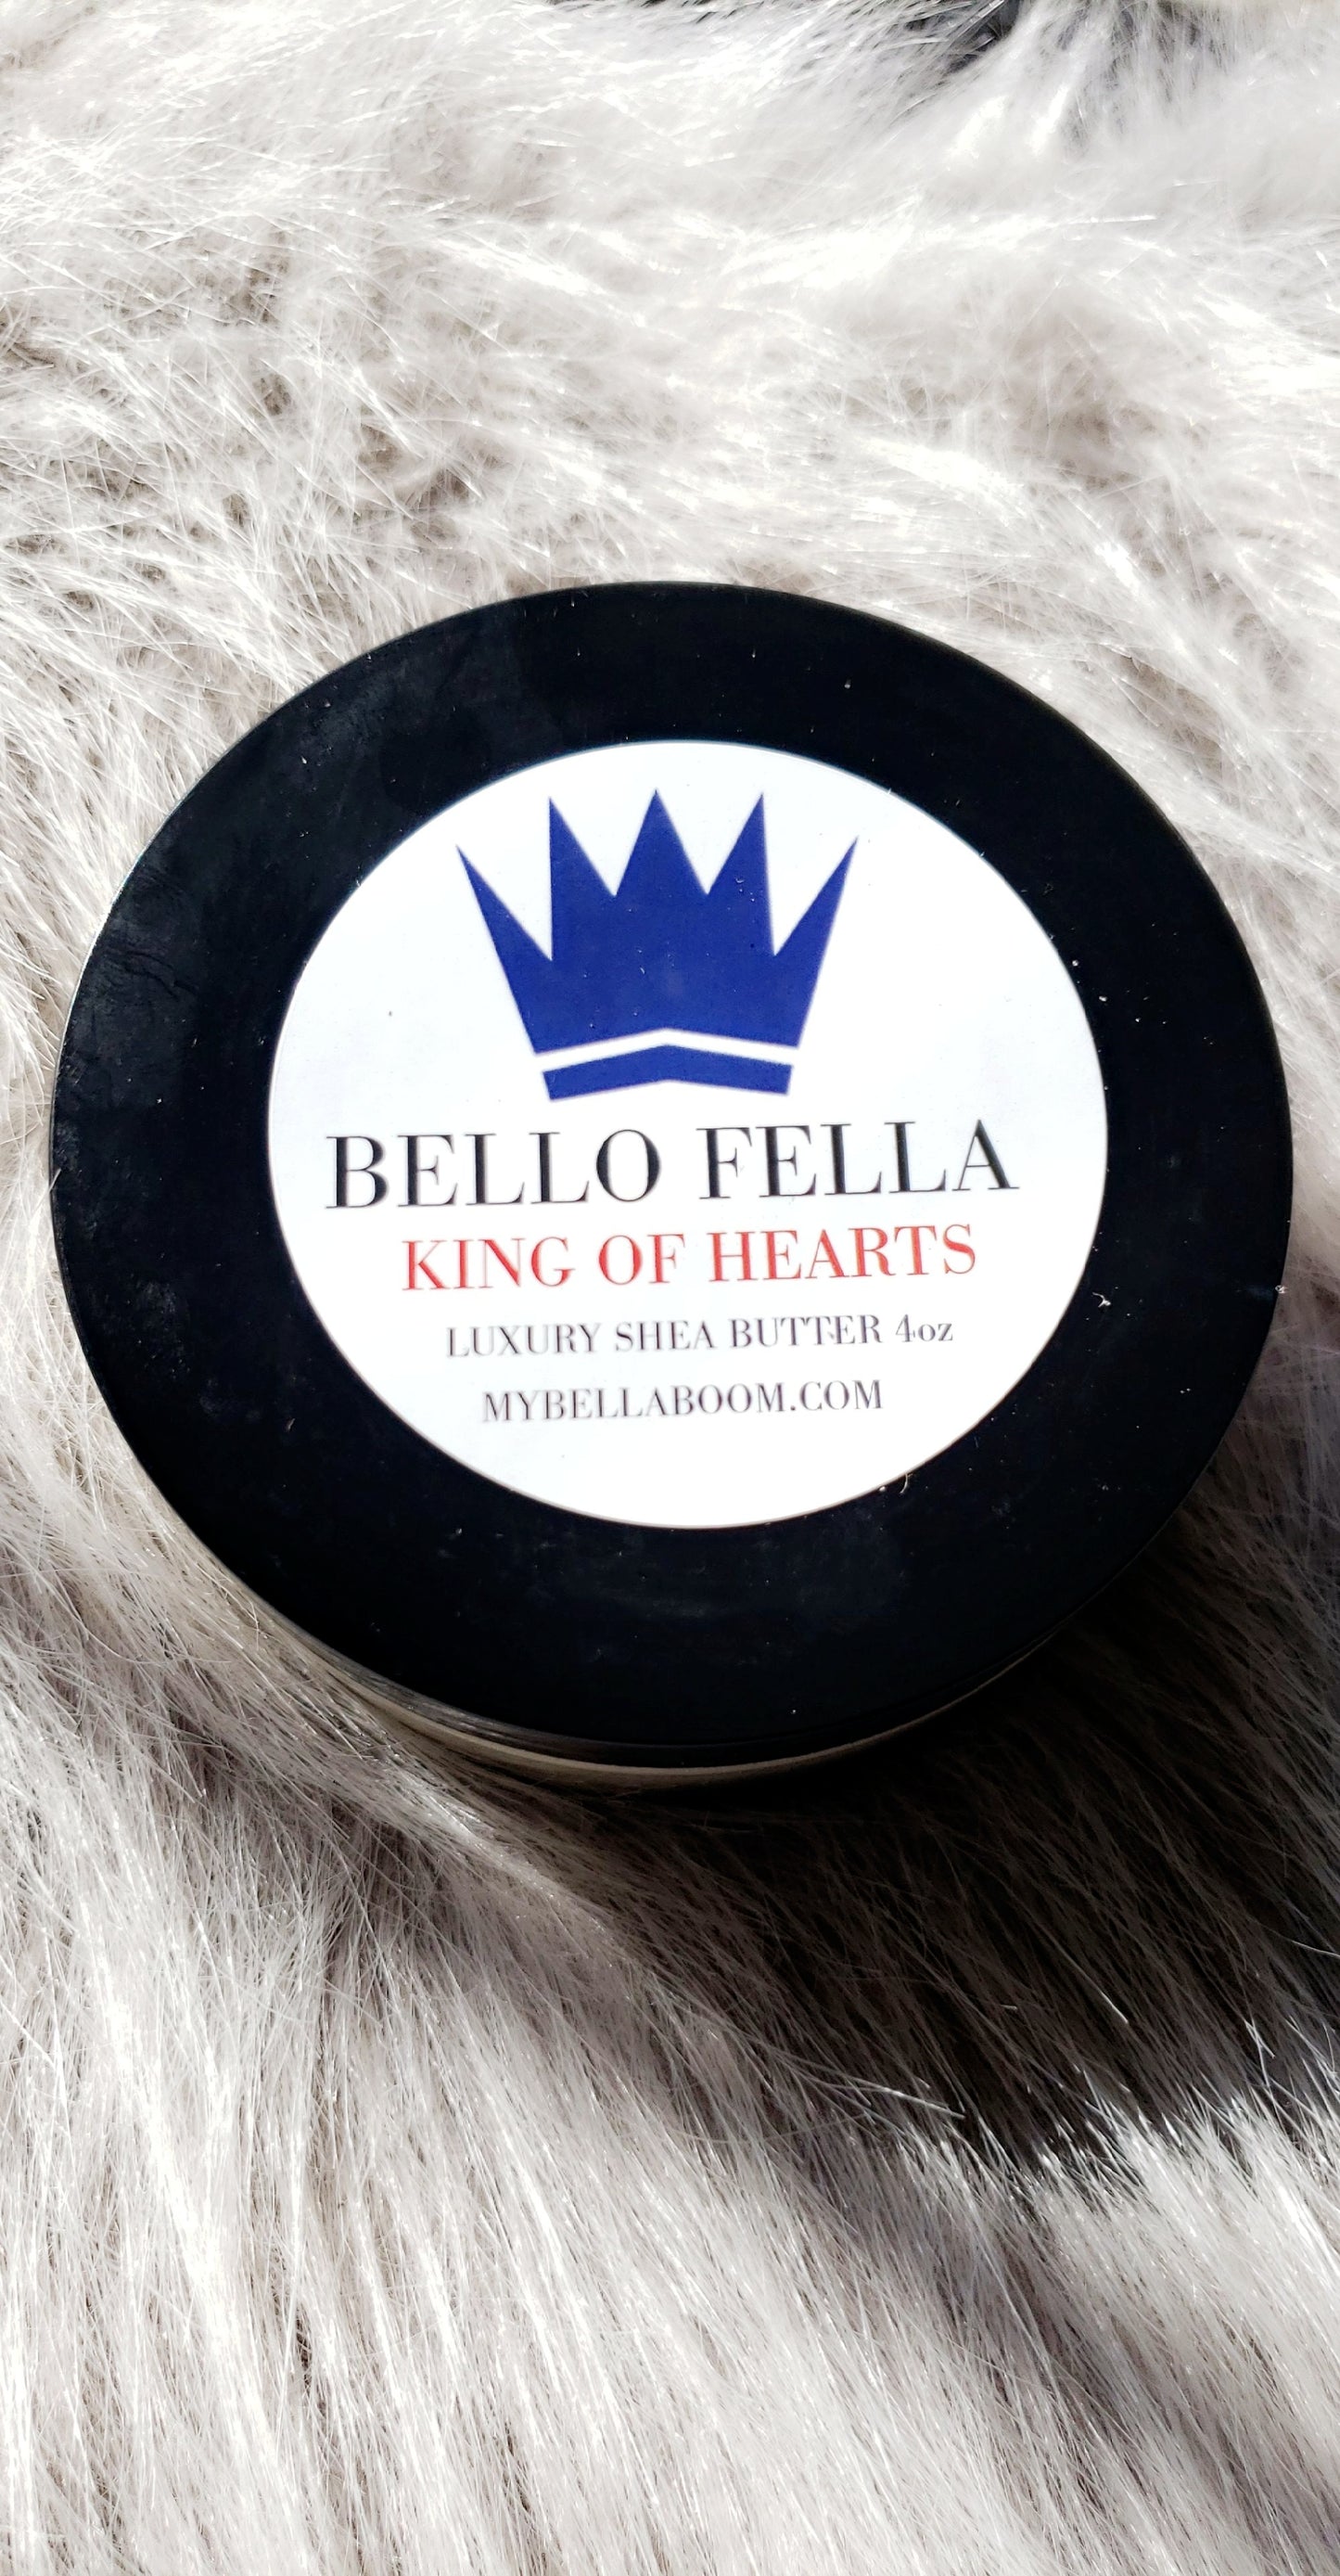 Bello Fella "King of Hearts"